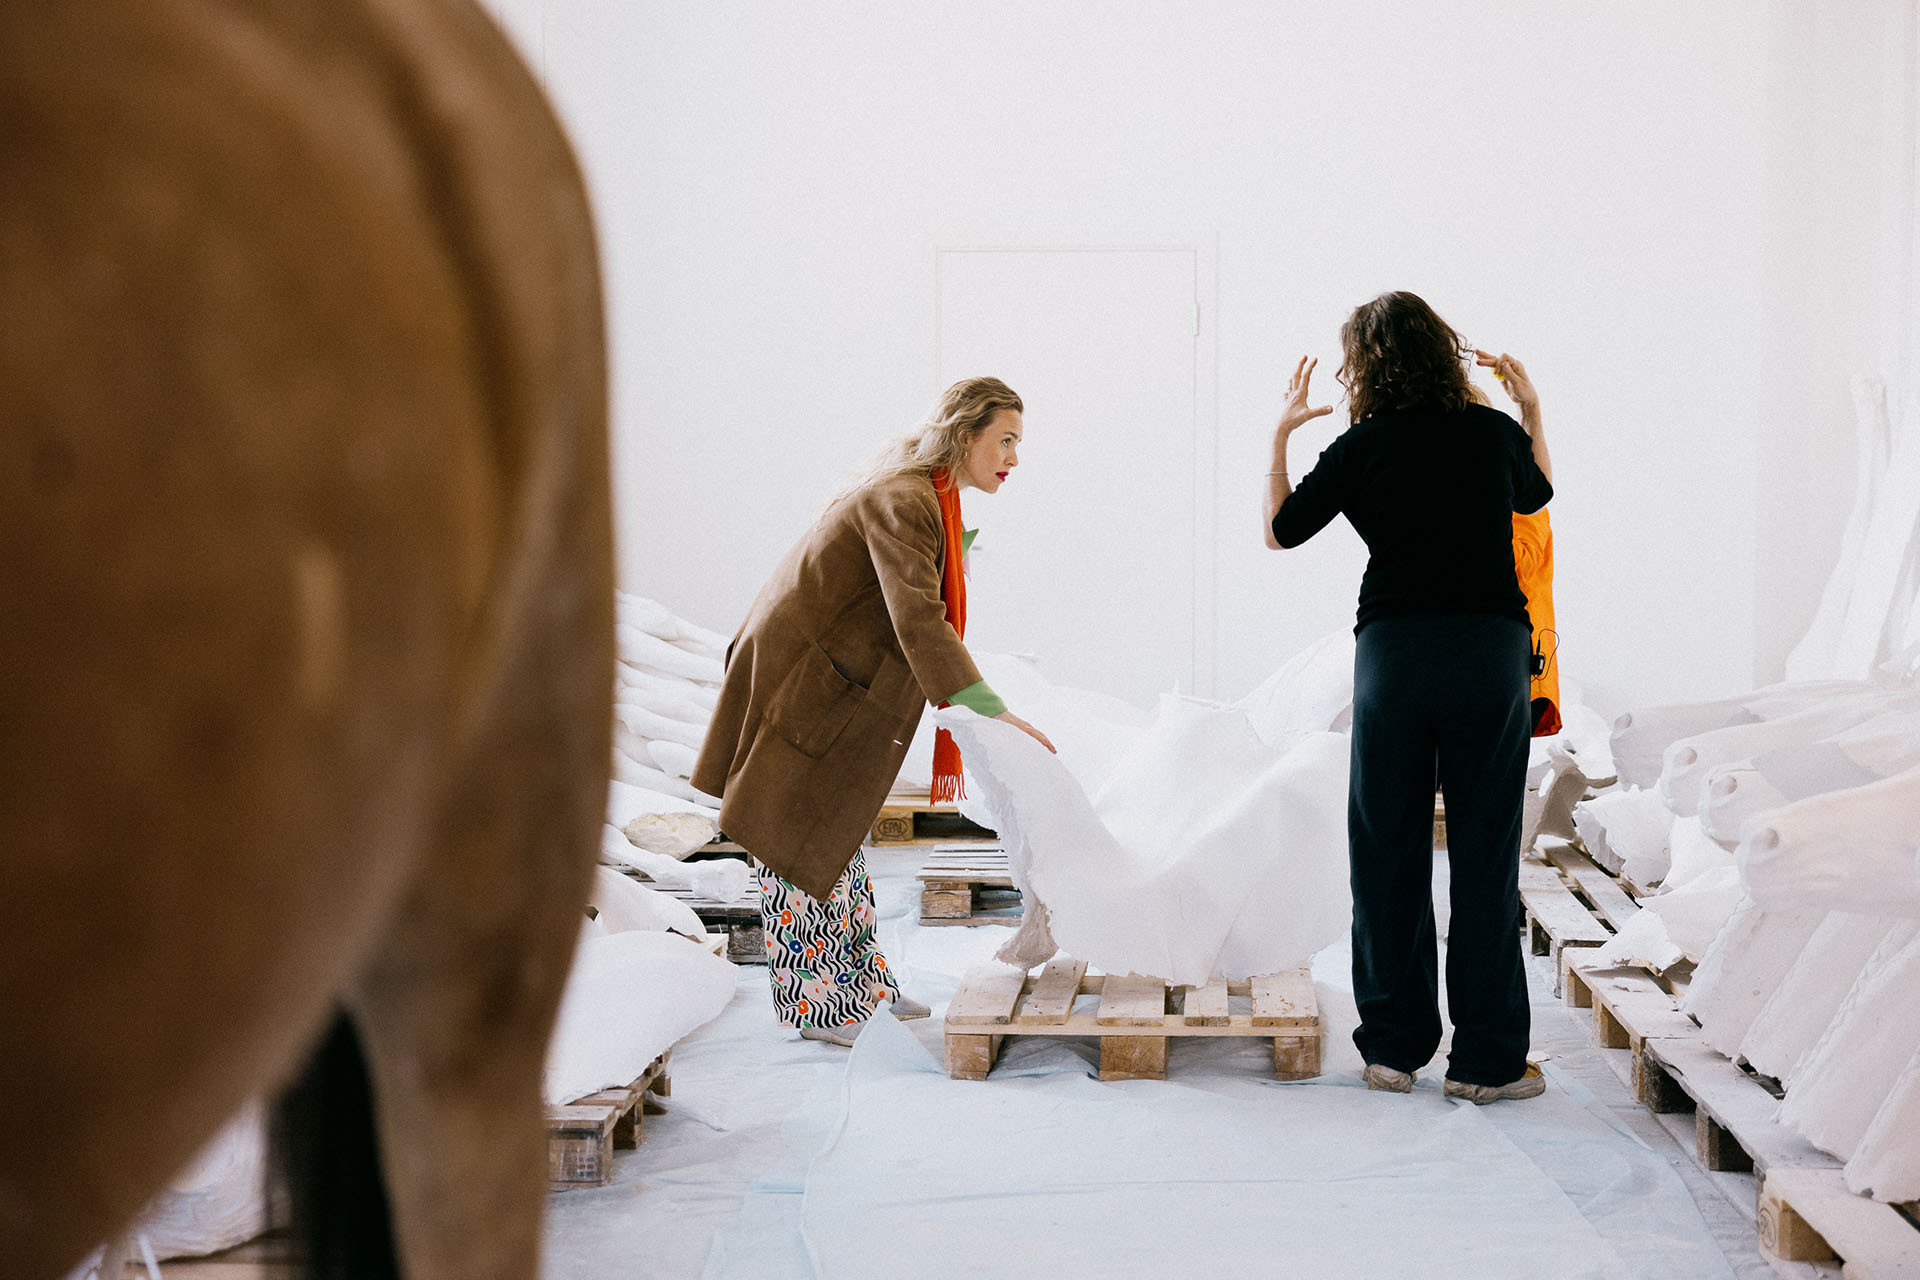 Ragnhild Brochmann visits Vibeke Tandberg in her studio, where Tandberg reveals her large horse sculptures.